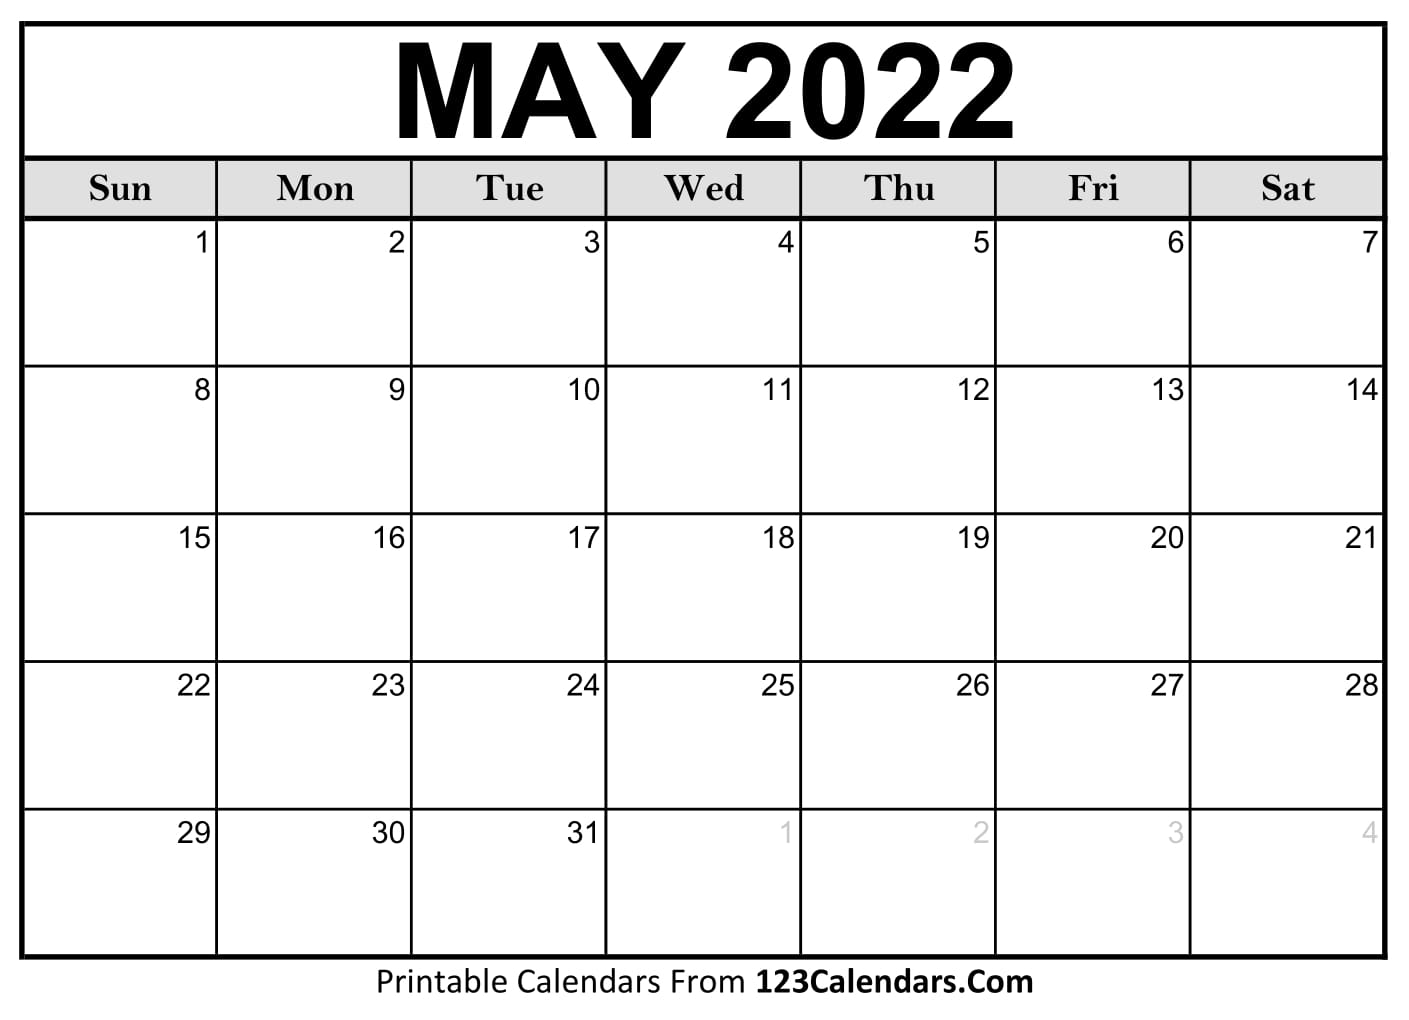 May Calendar Template 2022 Printable May 2022 Calendar Templates - 123Calendars.com